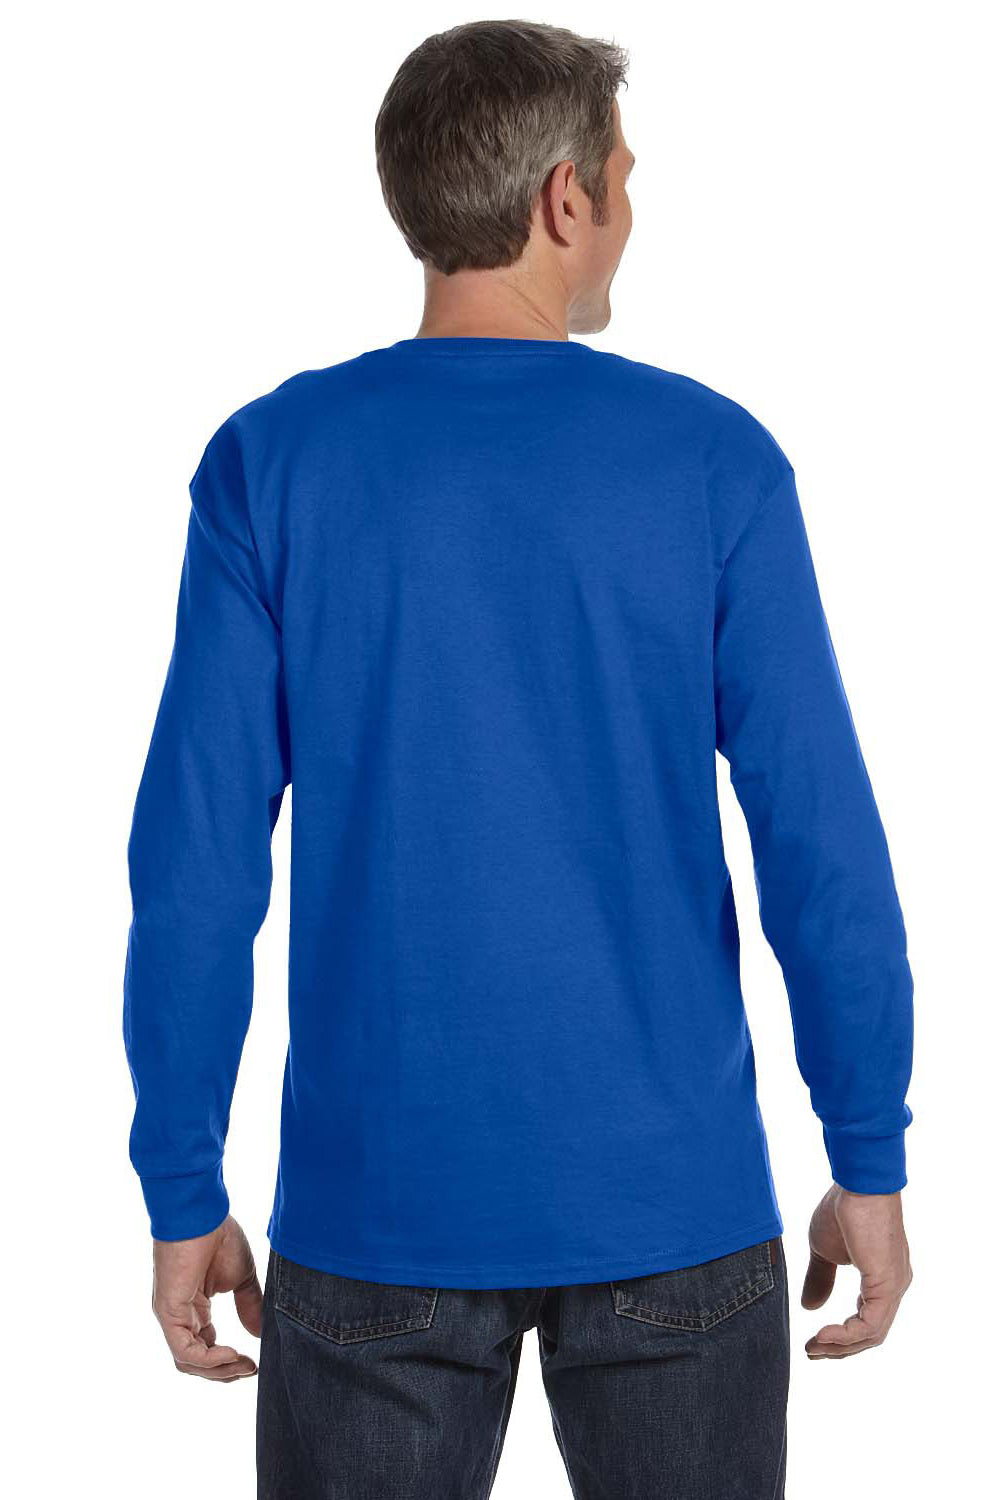 Gildan G540 Mens Long Sleeve Crewneck T-Shirt Royal Blue Back